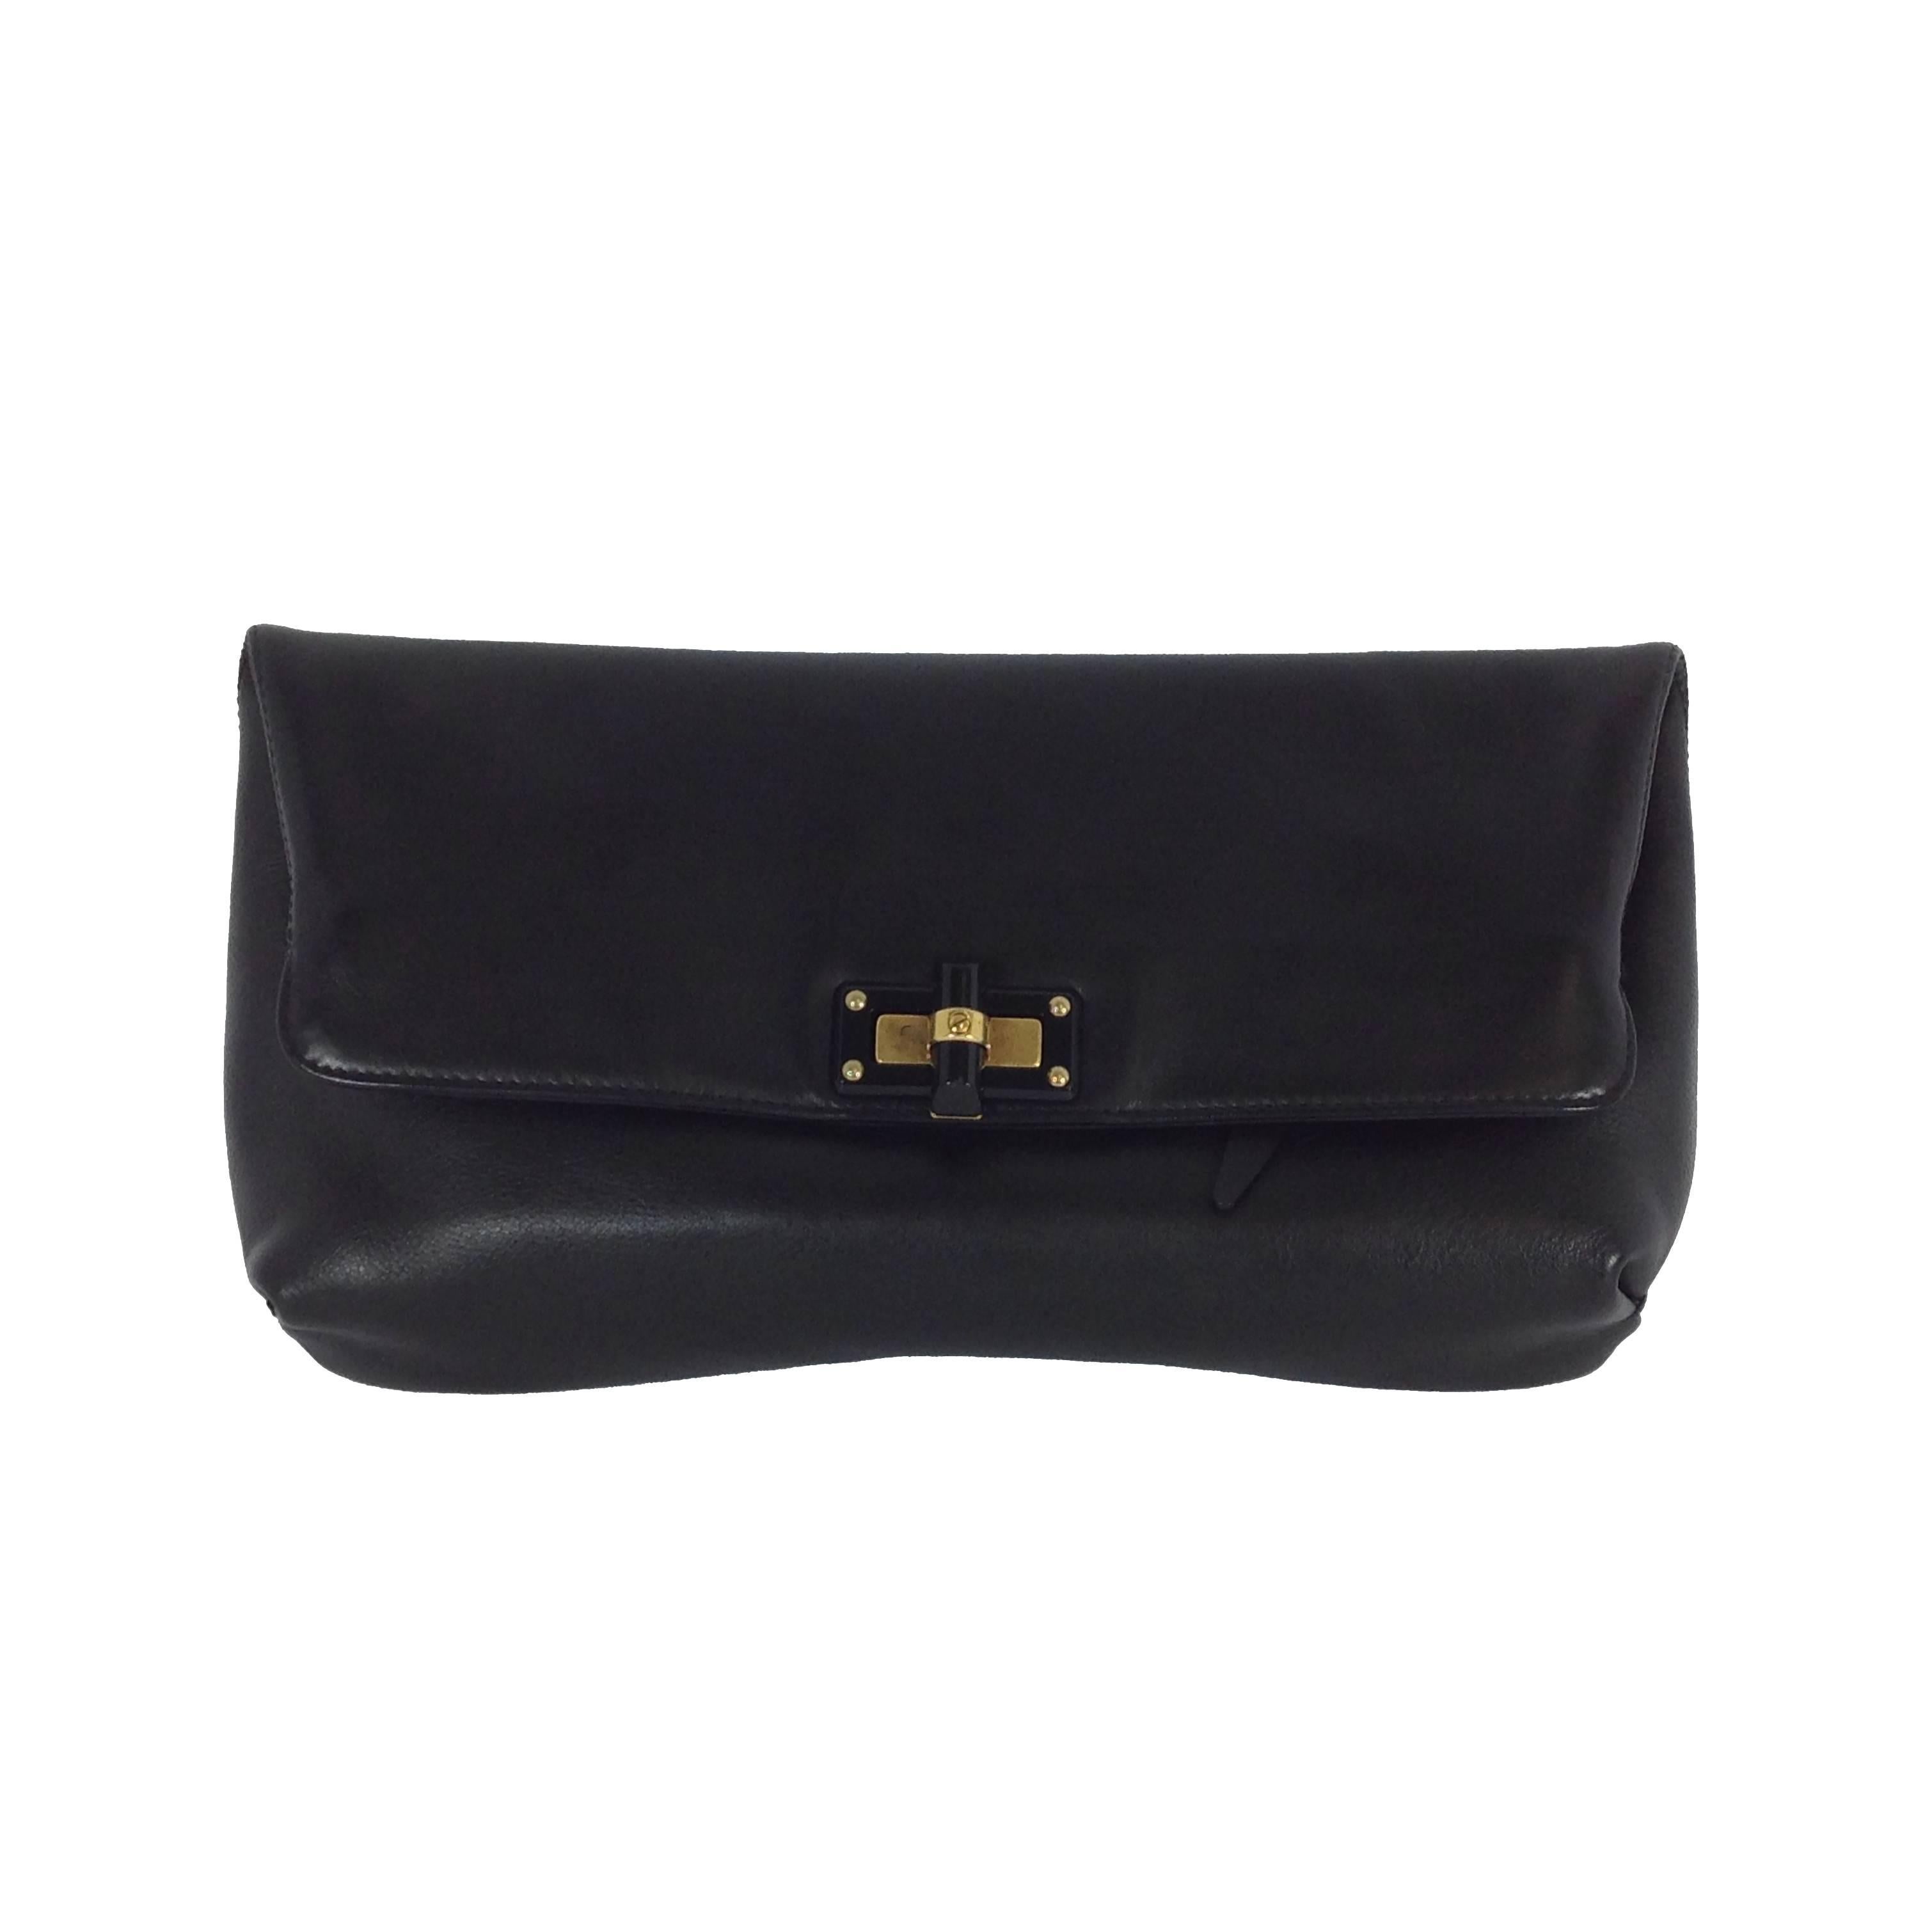 Lanvin black leather clutch bag           For Sale